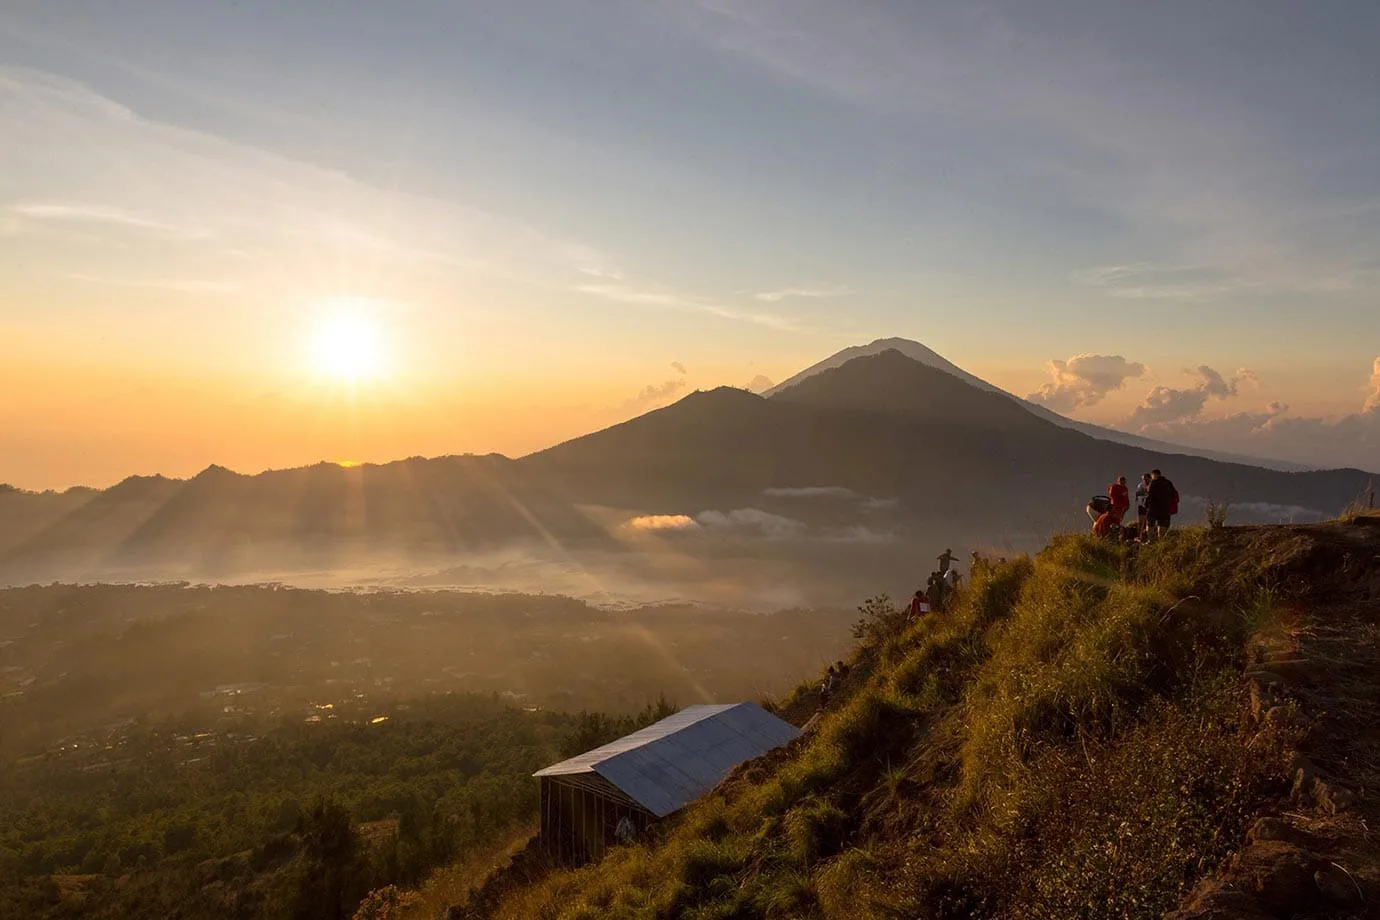 Hiking up Mount Batur for sunrise